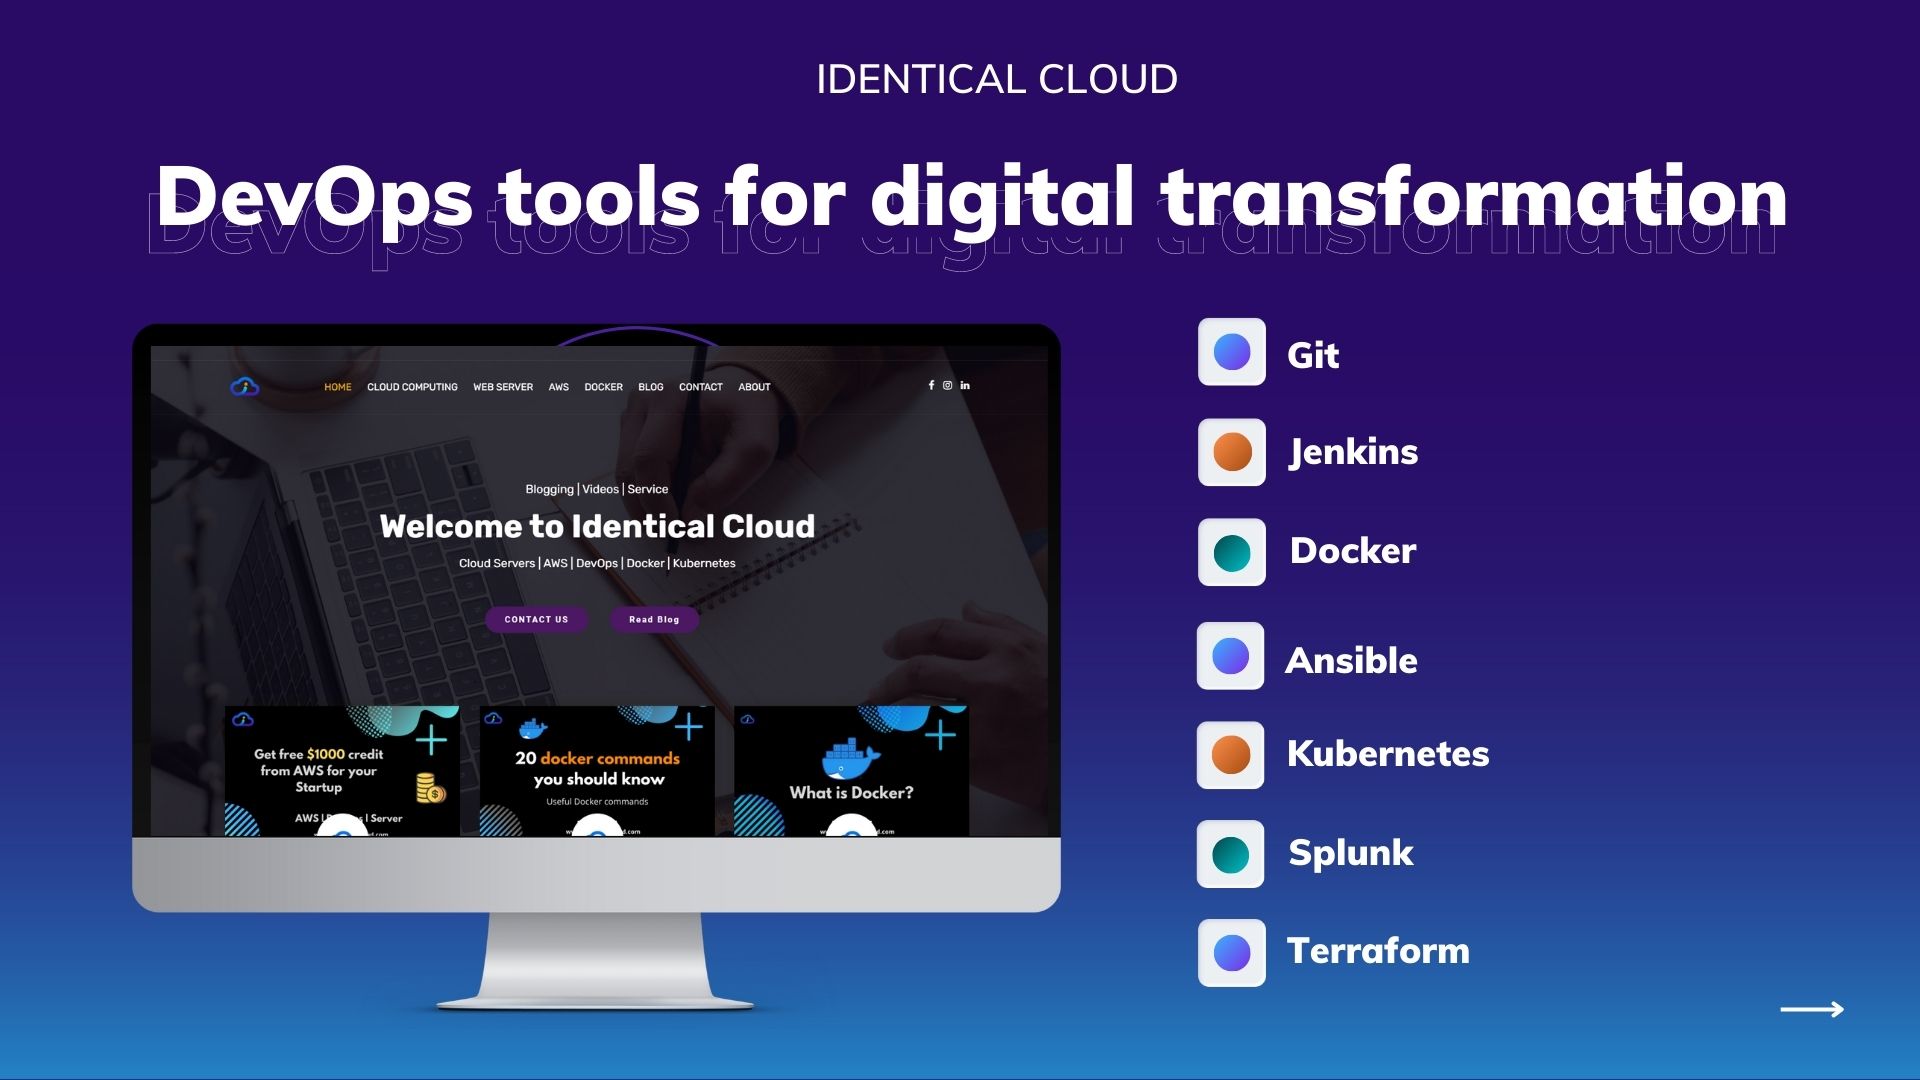 DevOps tools for digital transformation